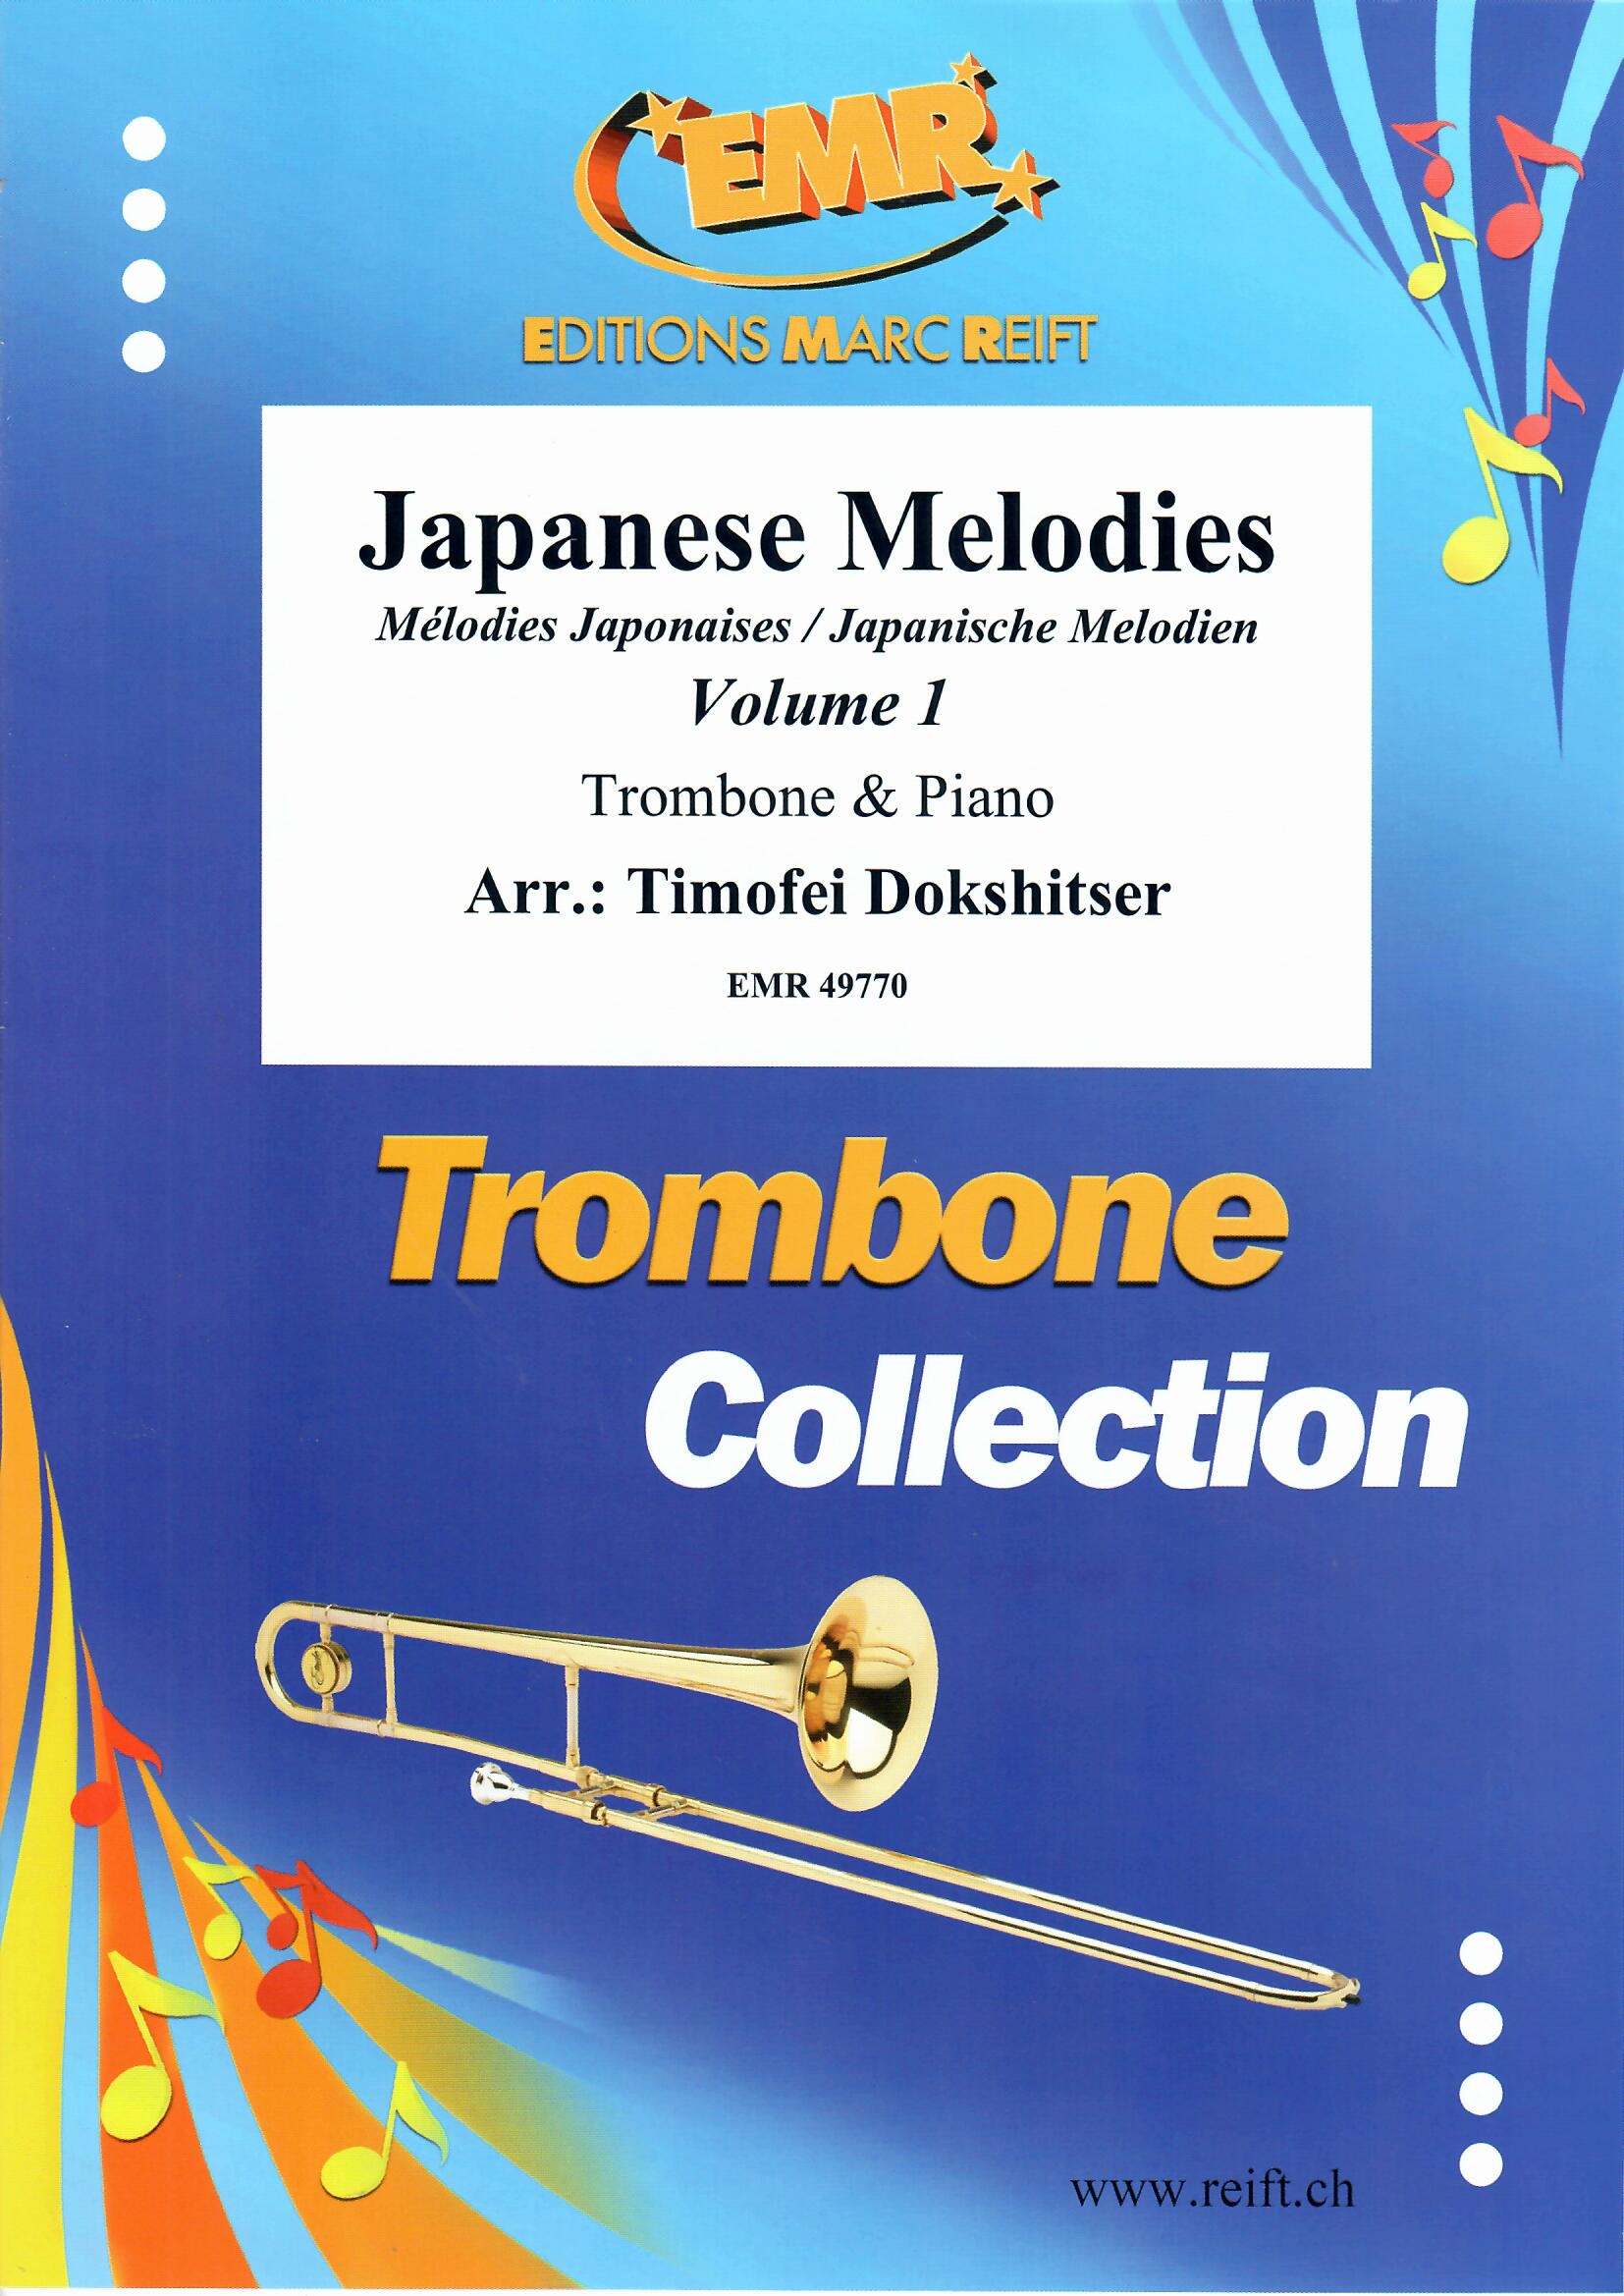 JAPANESE MELODIES VOL. 1 - Trombone & Piano